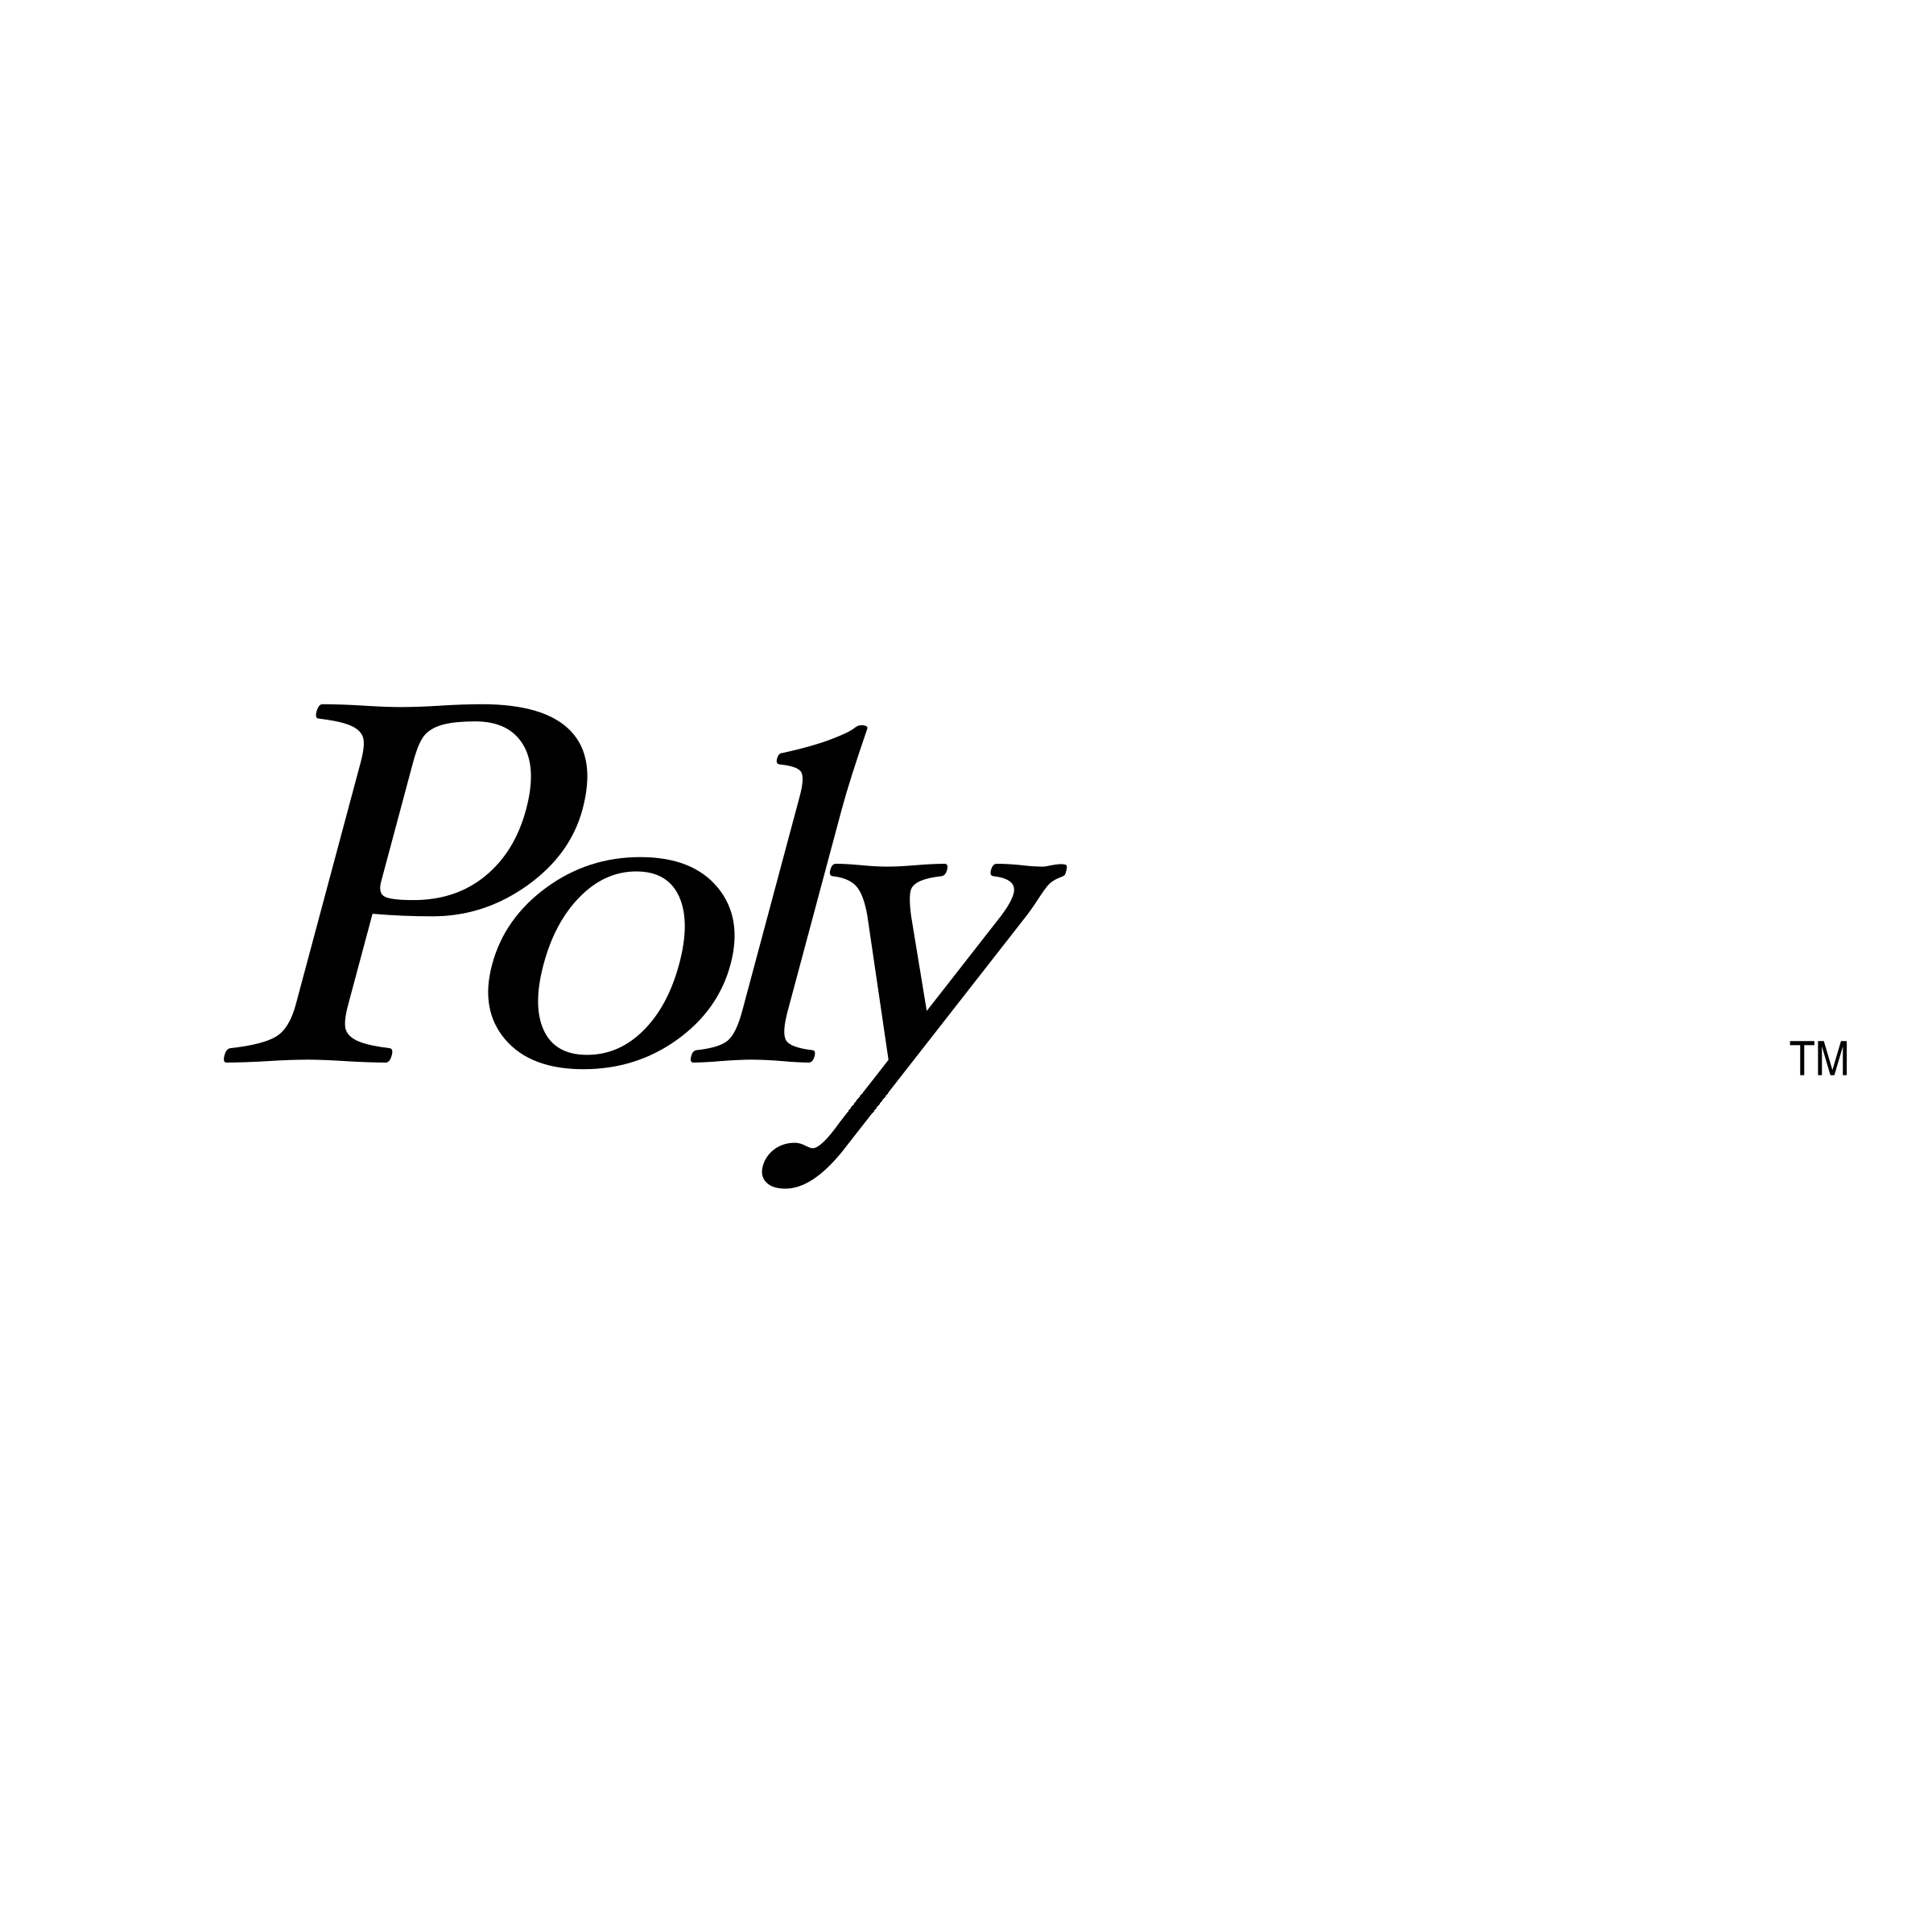 PolyOne Logo - PolyOne Logo PNG Transparent & SVG Vector